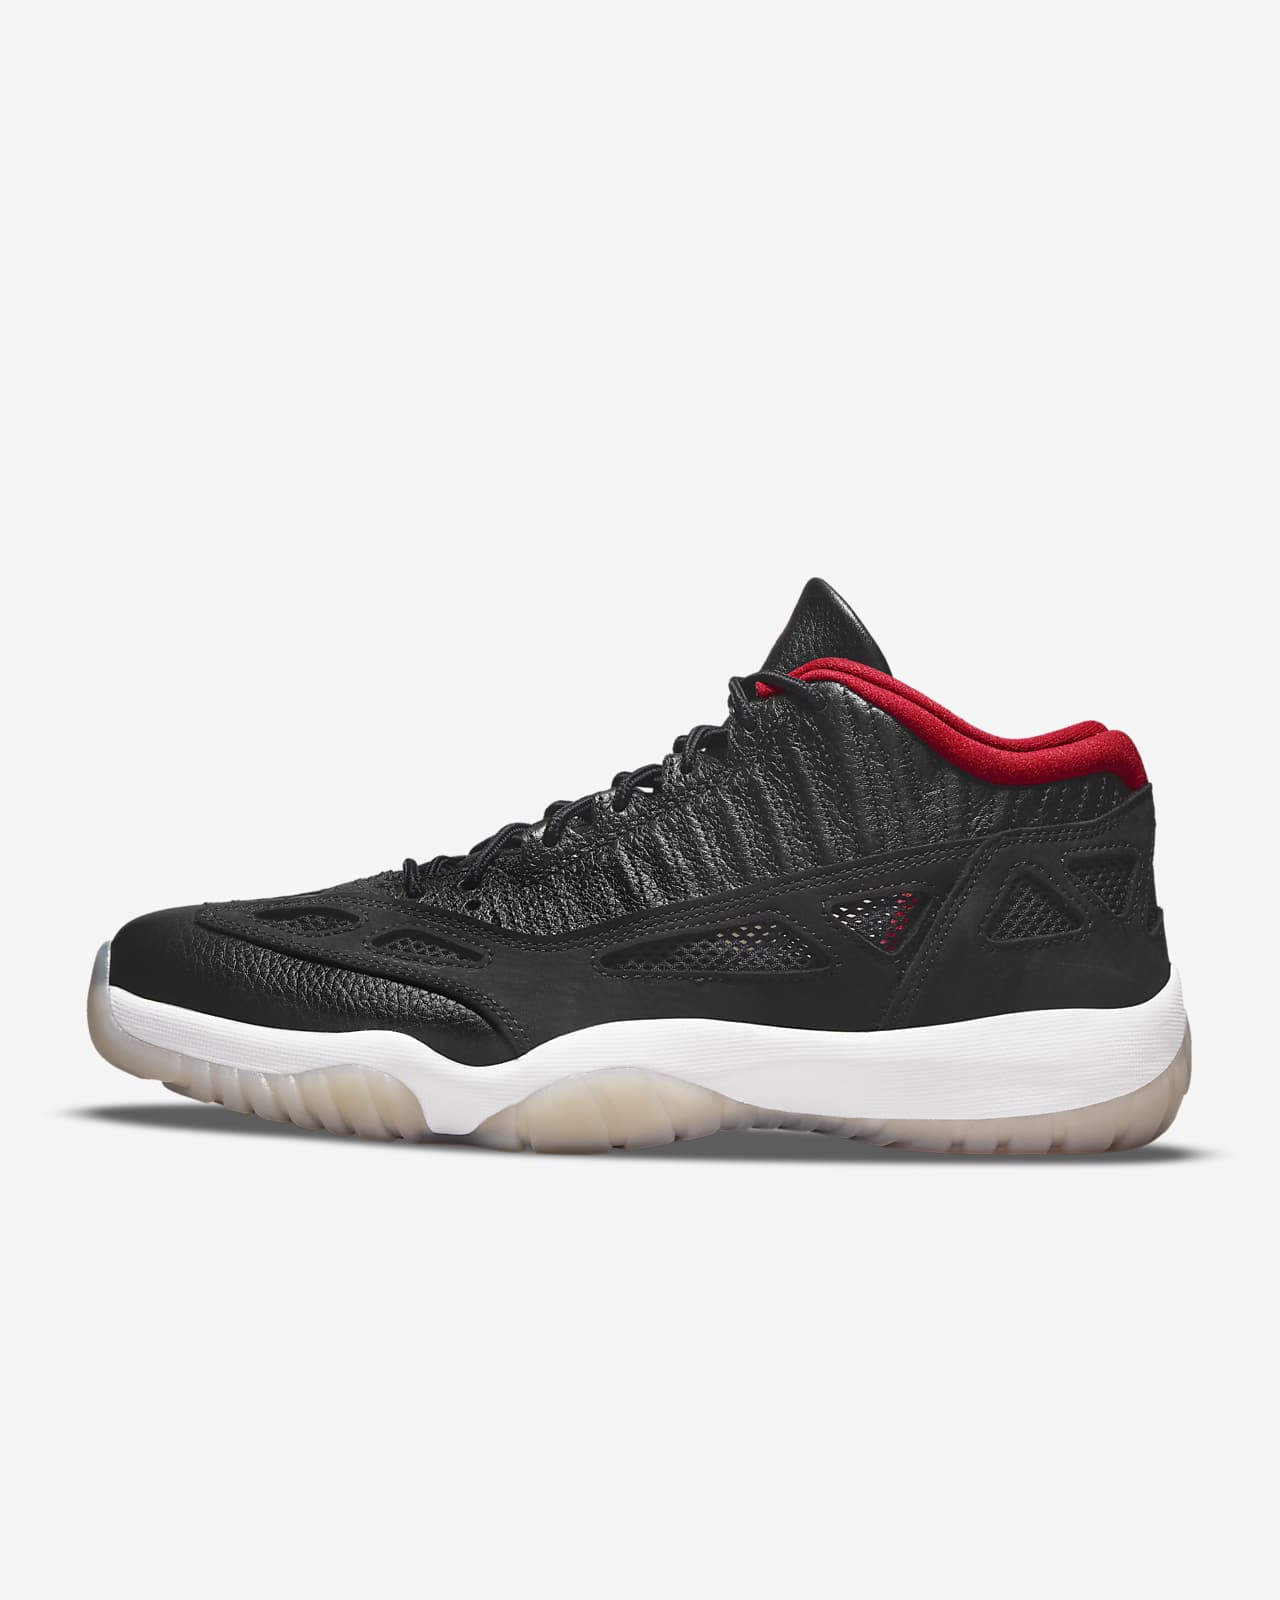 Jordan 11 Retro Low IE. Nike 